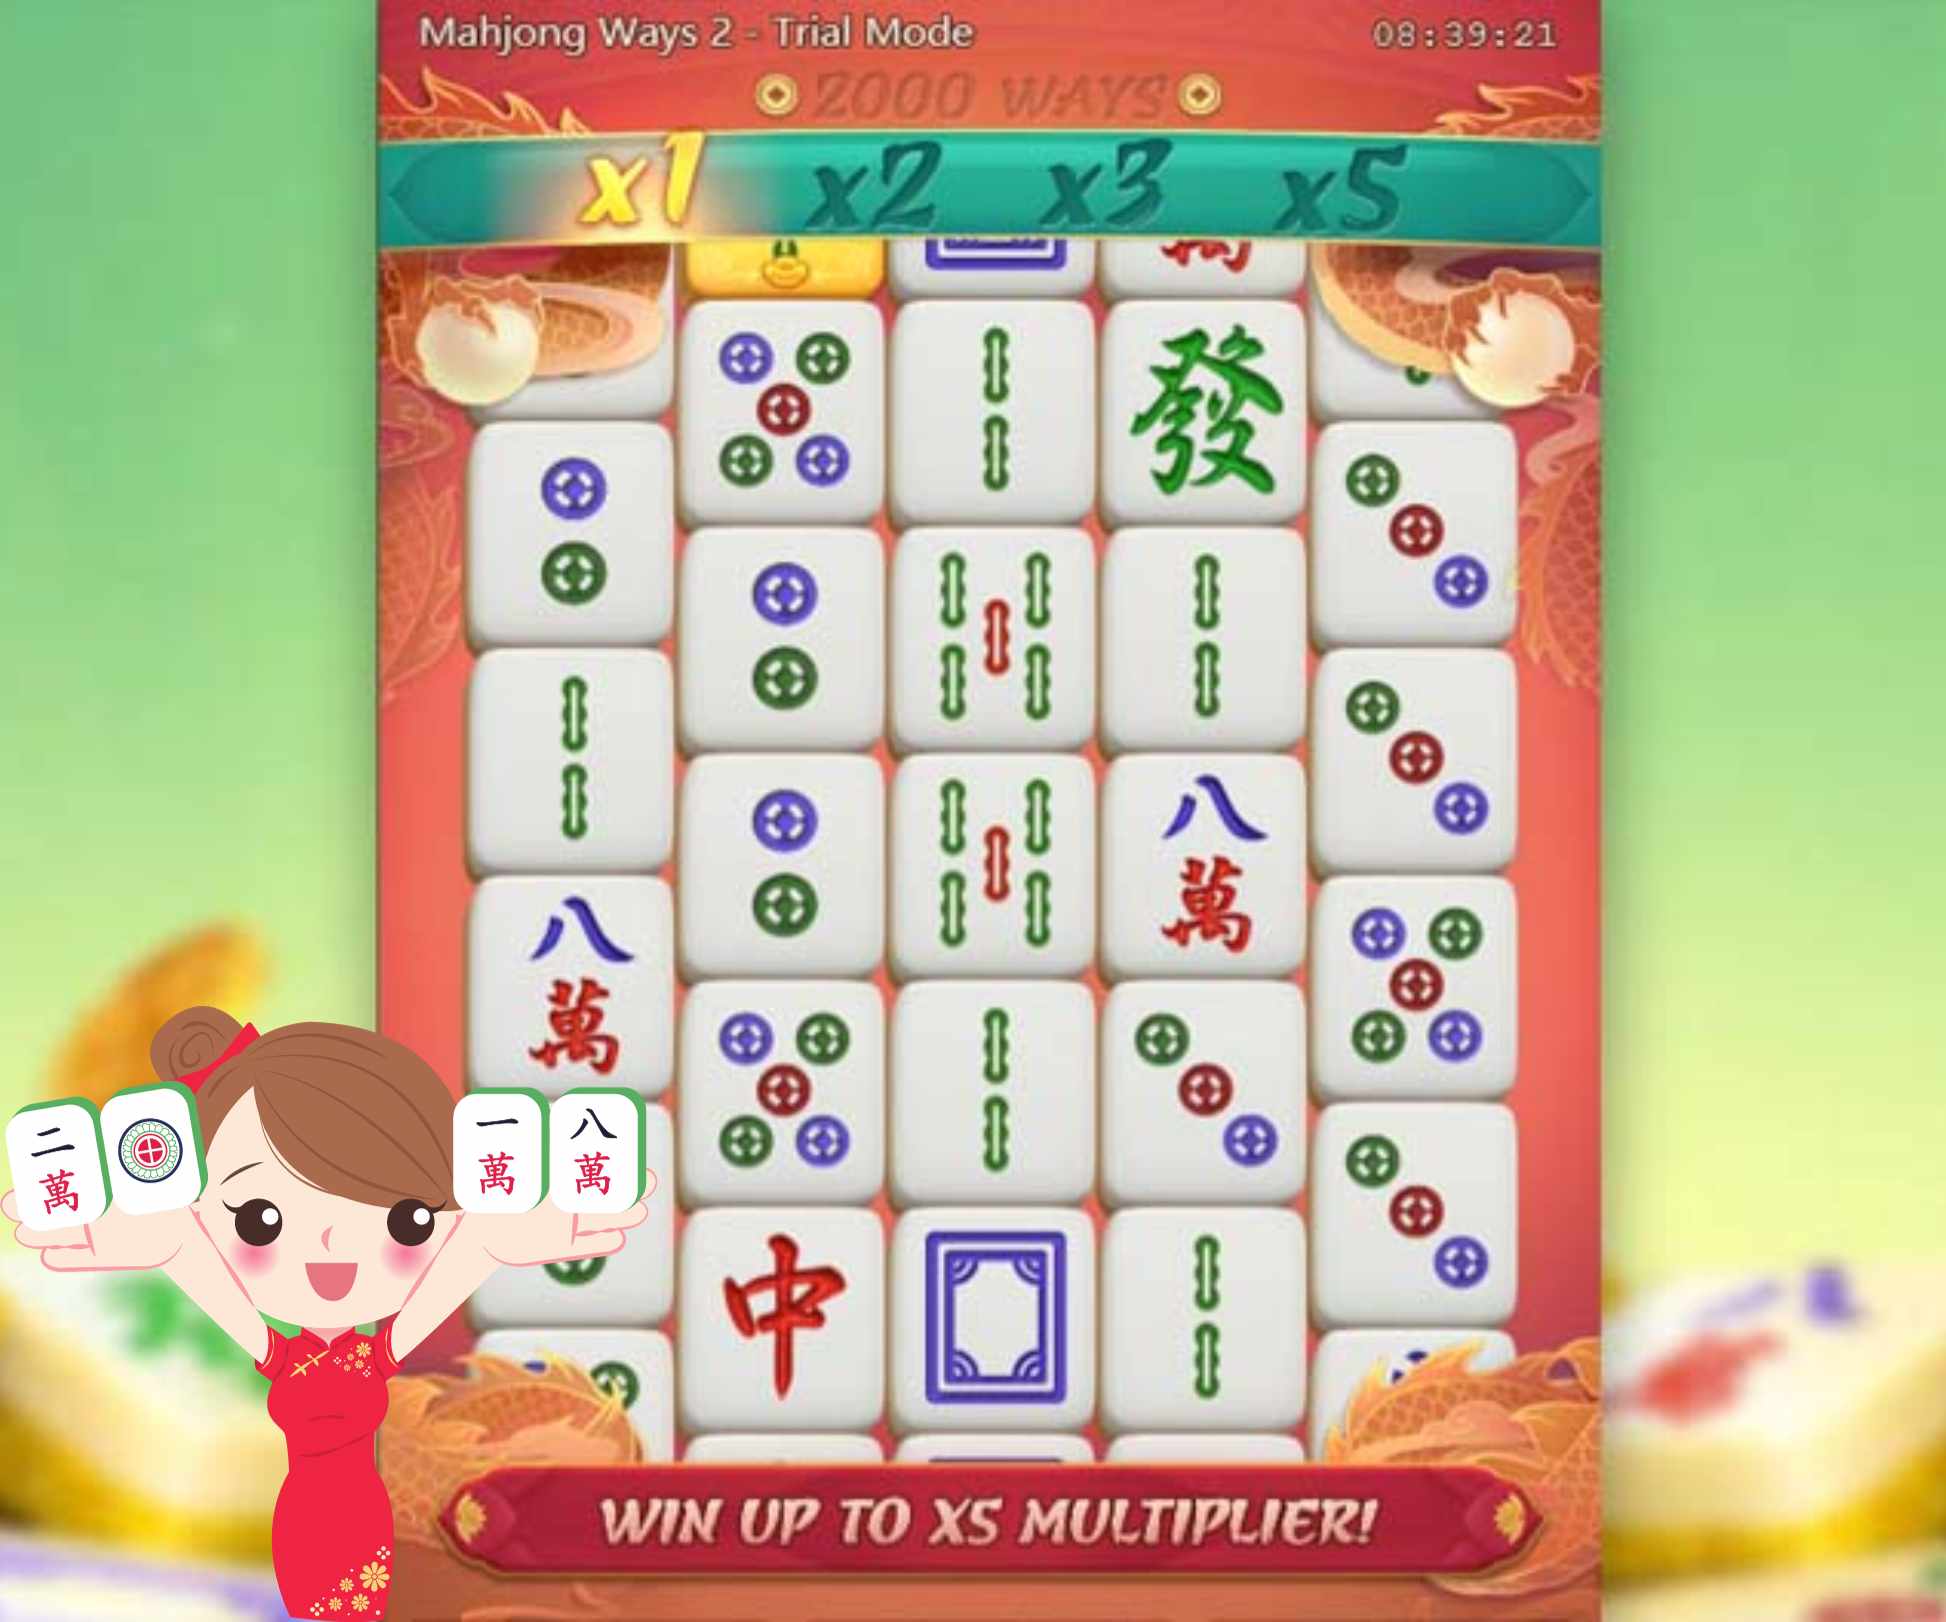 Mahjong comes with variations of mahjong ways 1 2 3